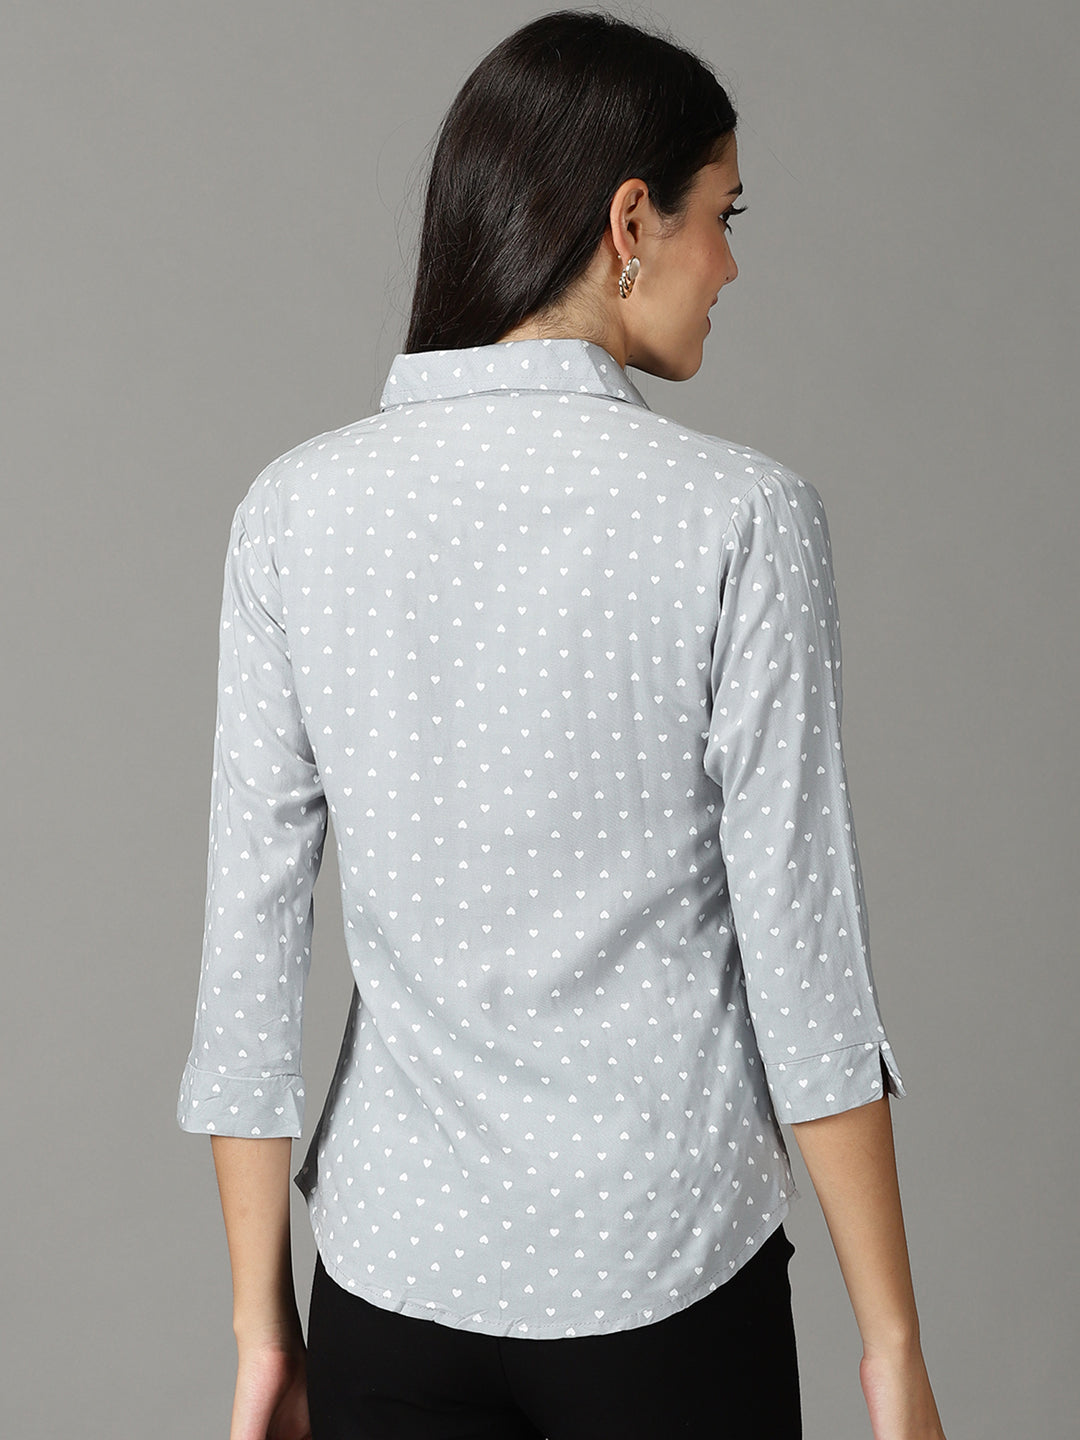 Women's Grey Printed Shirt